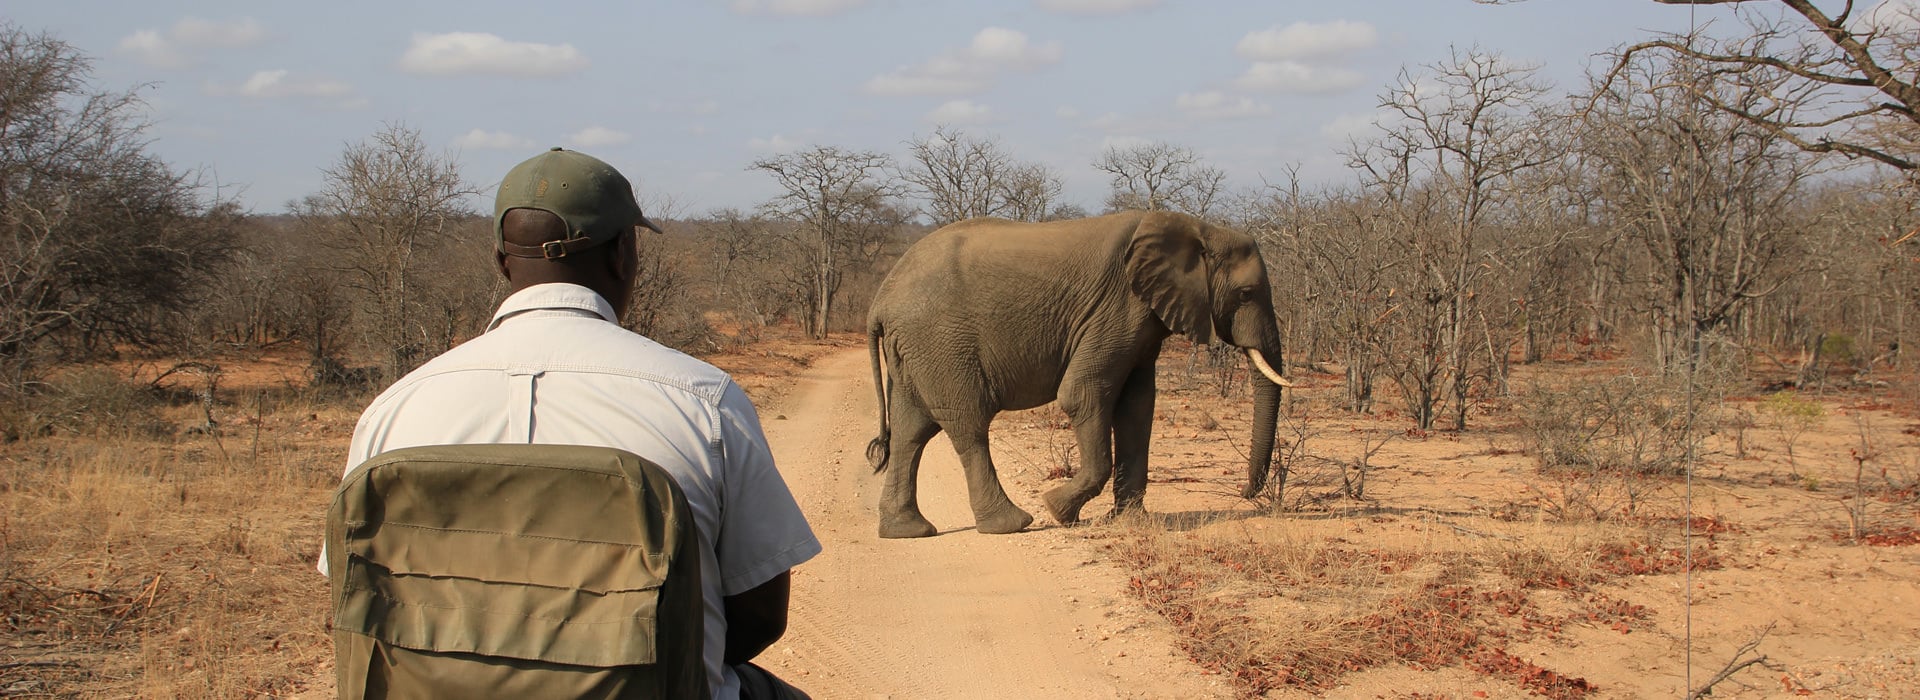 Südafrika Ranger mit Elefant auf Safari